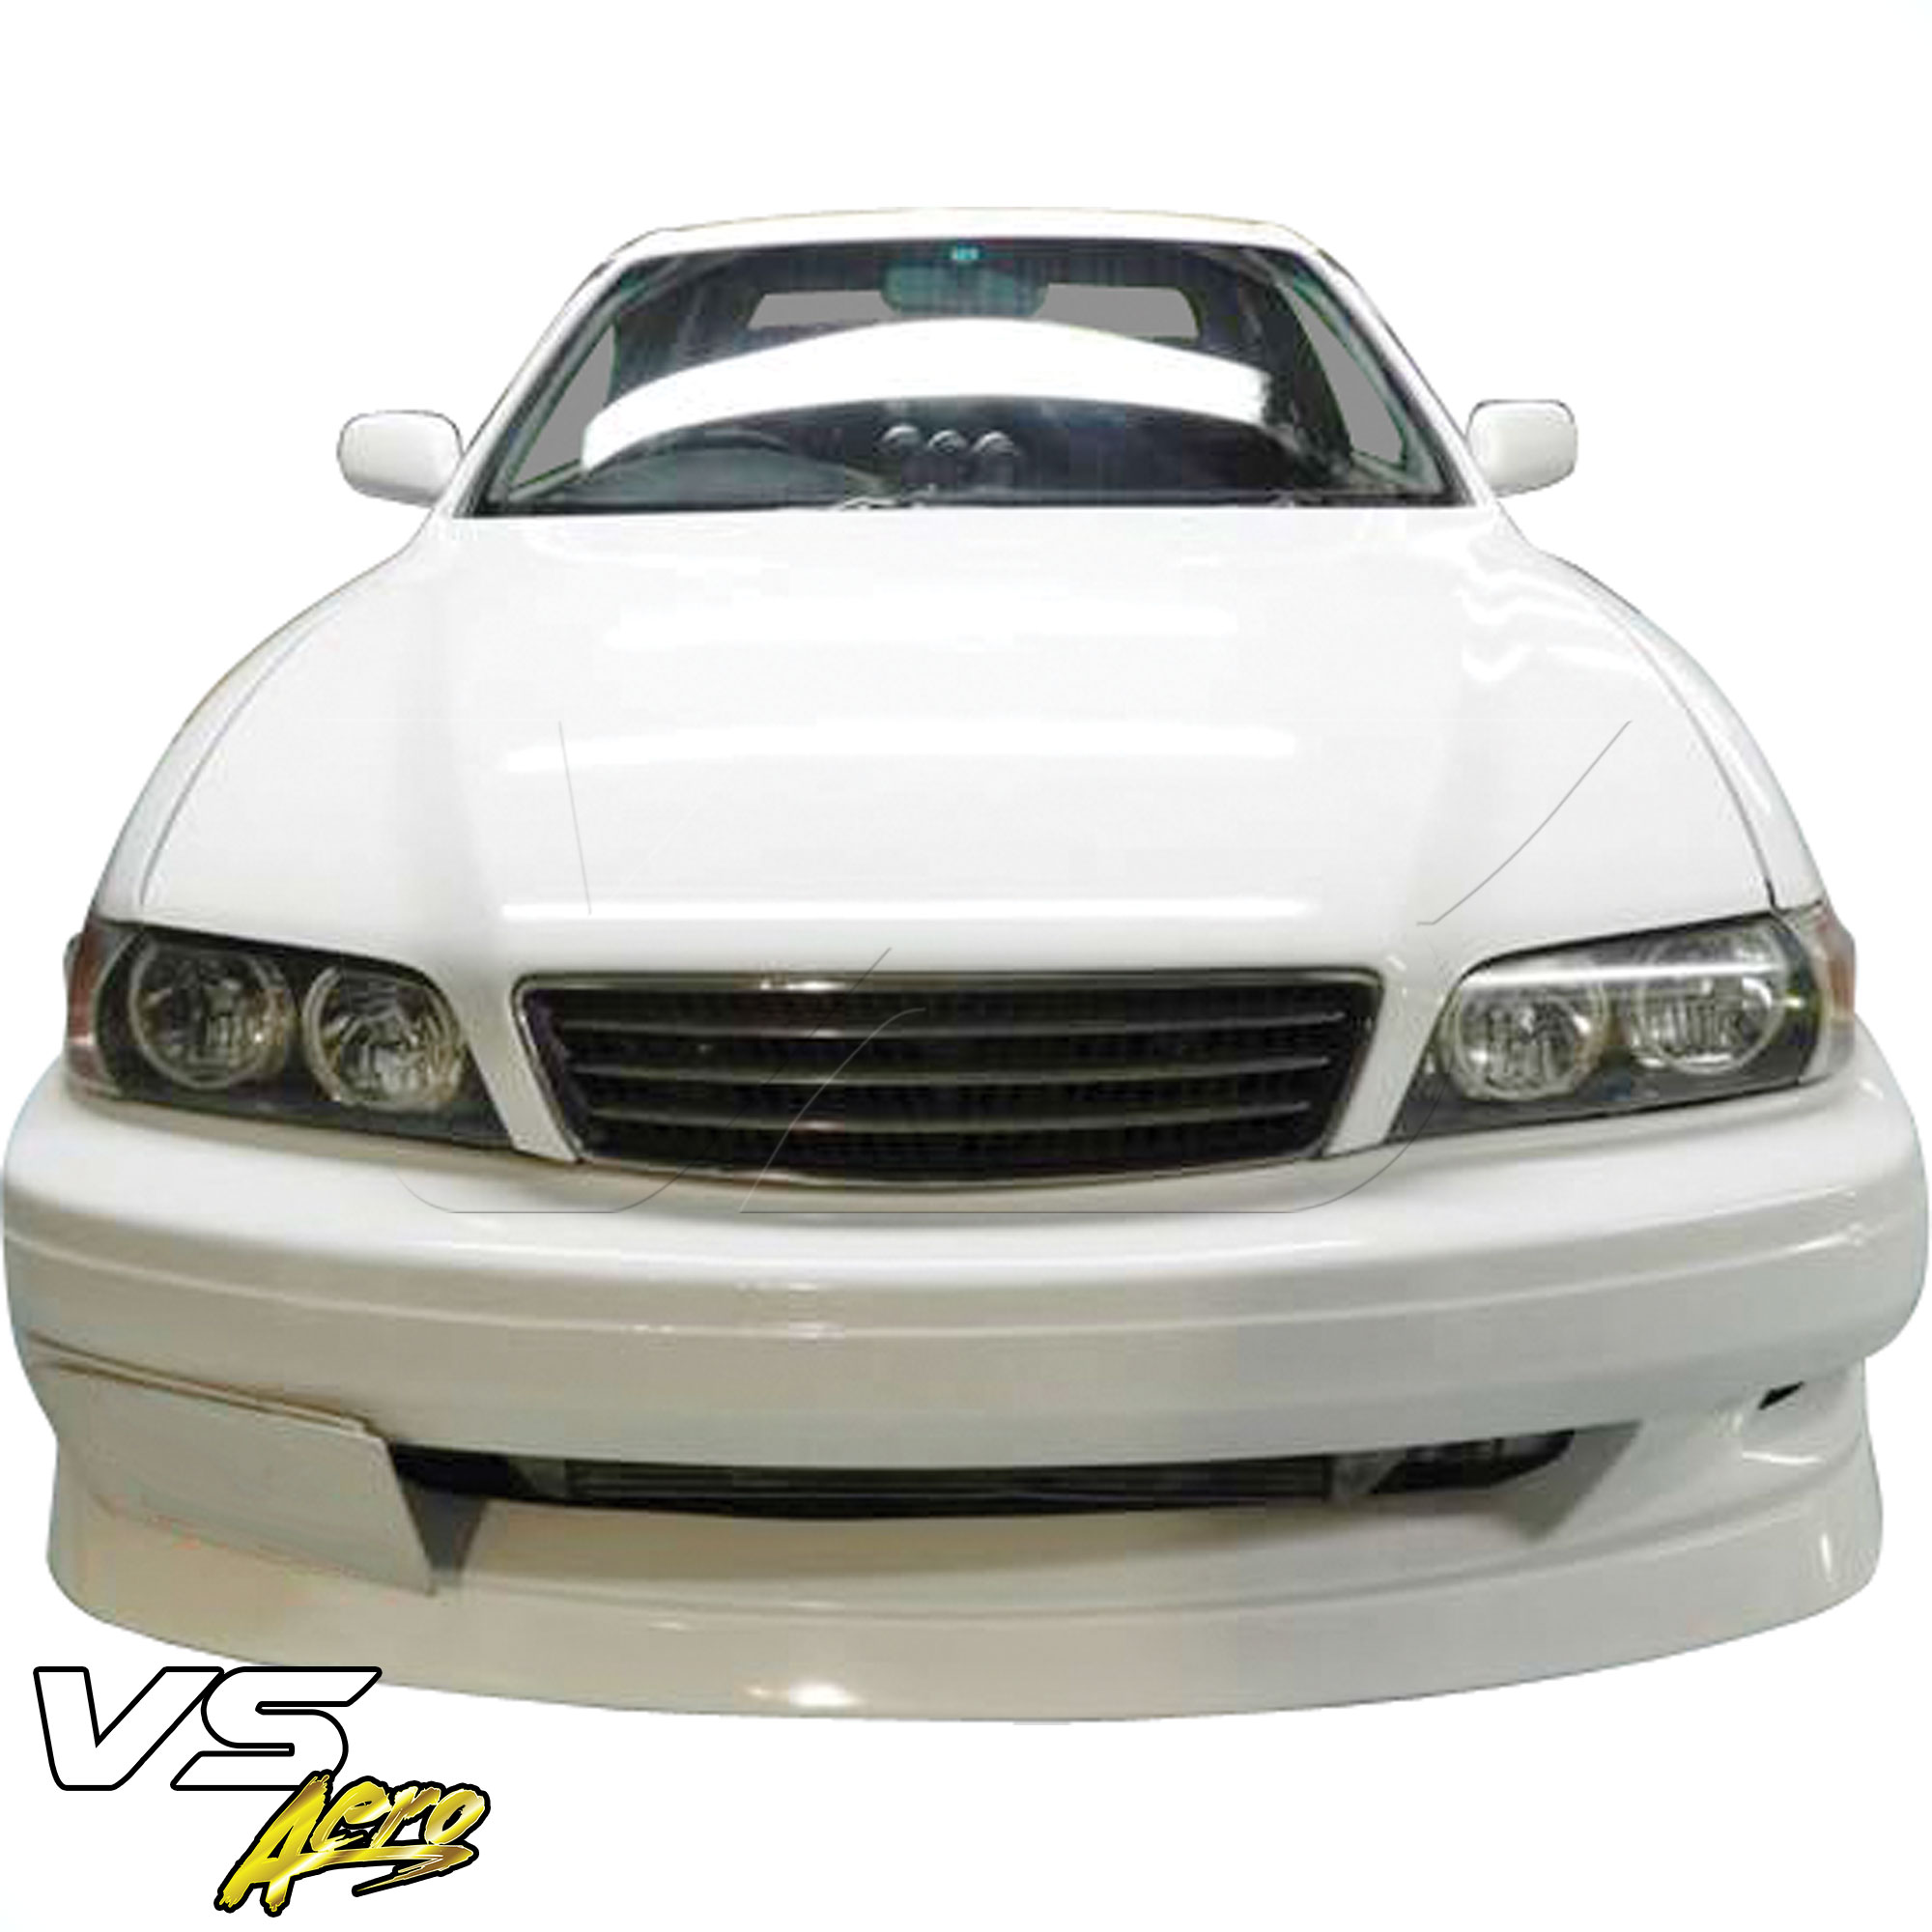 VSaero FRP URA vL Front Bumper > Toyota Chaser JZX100 1996-2000 - Image 21